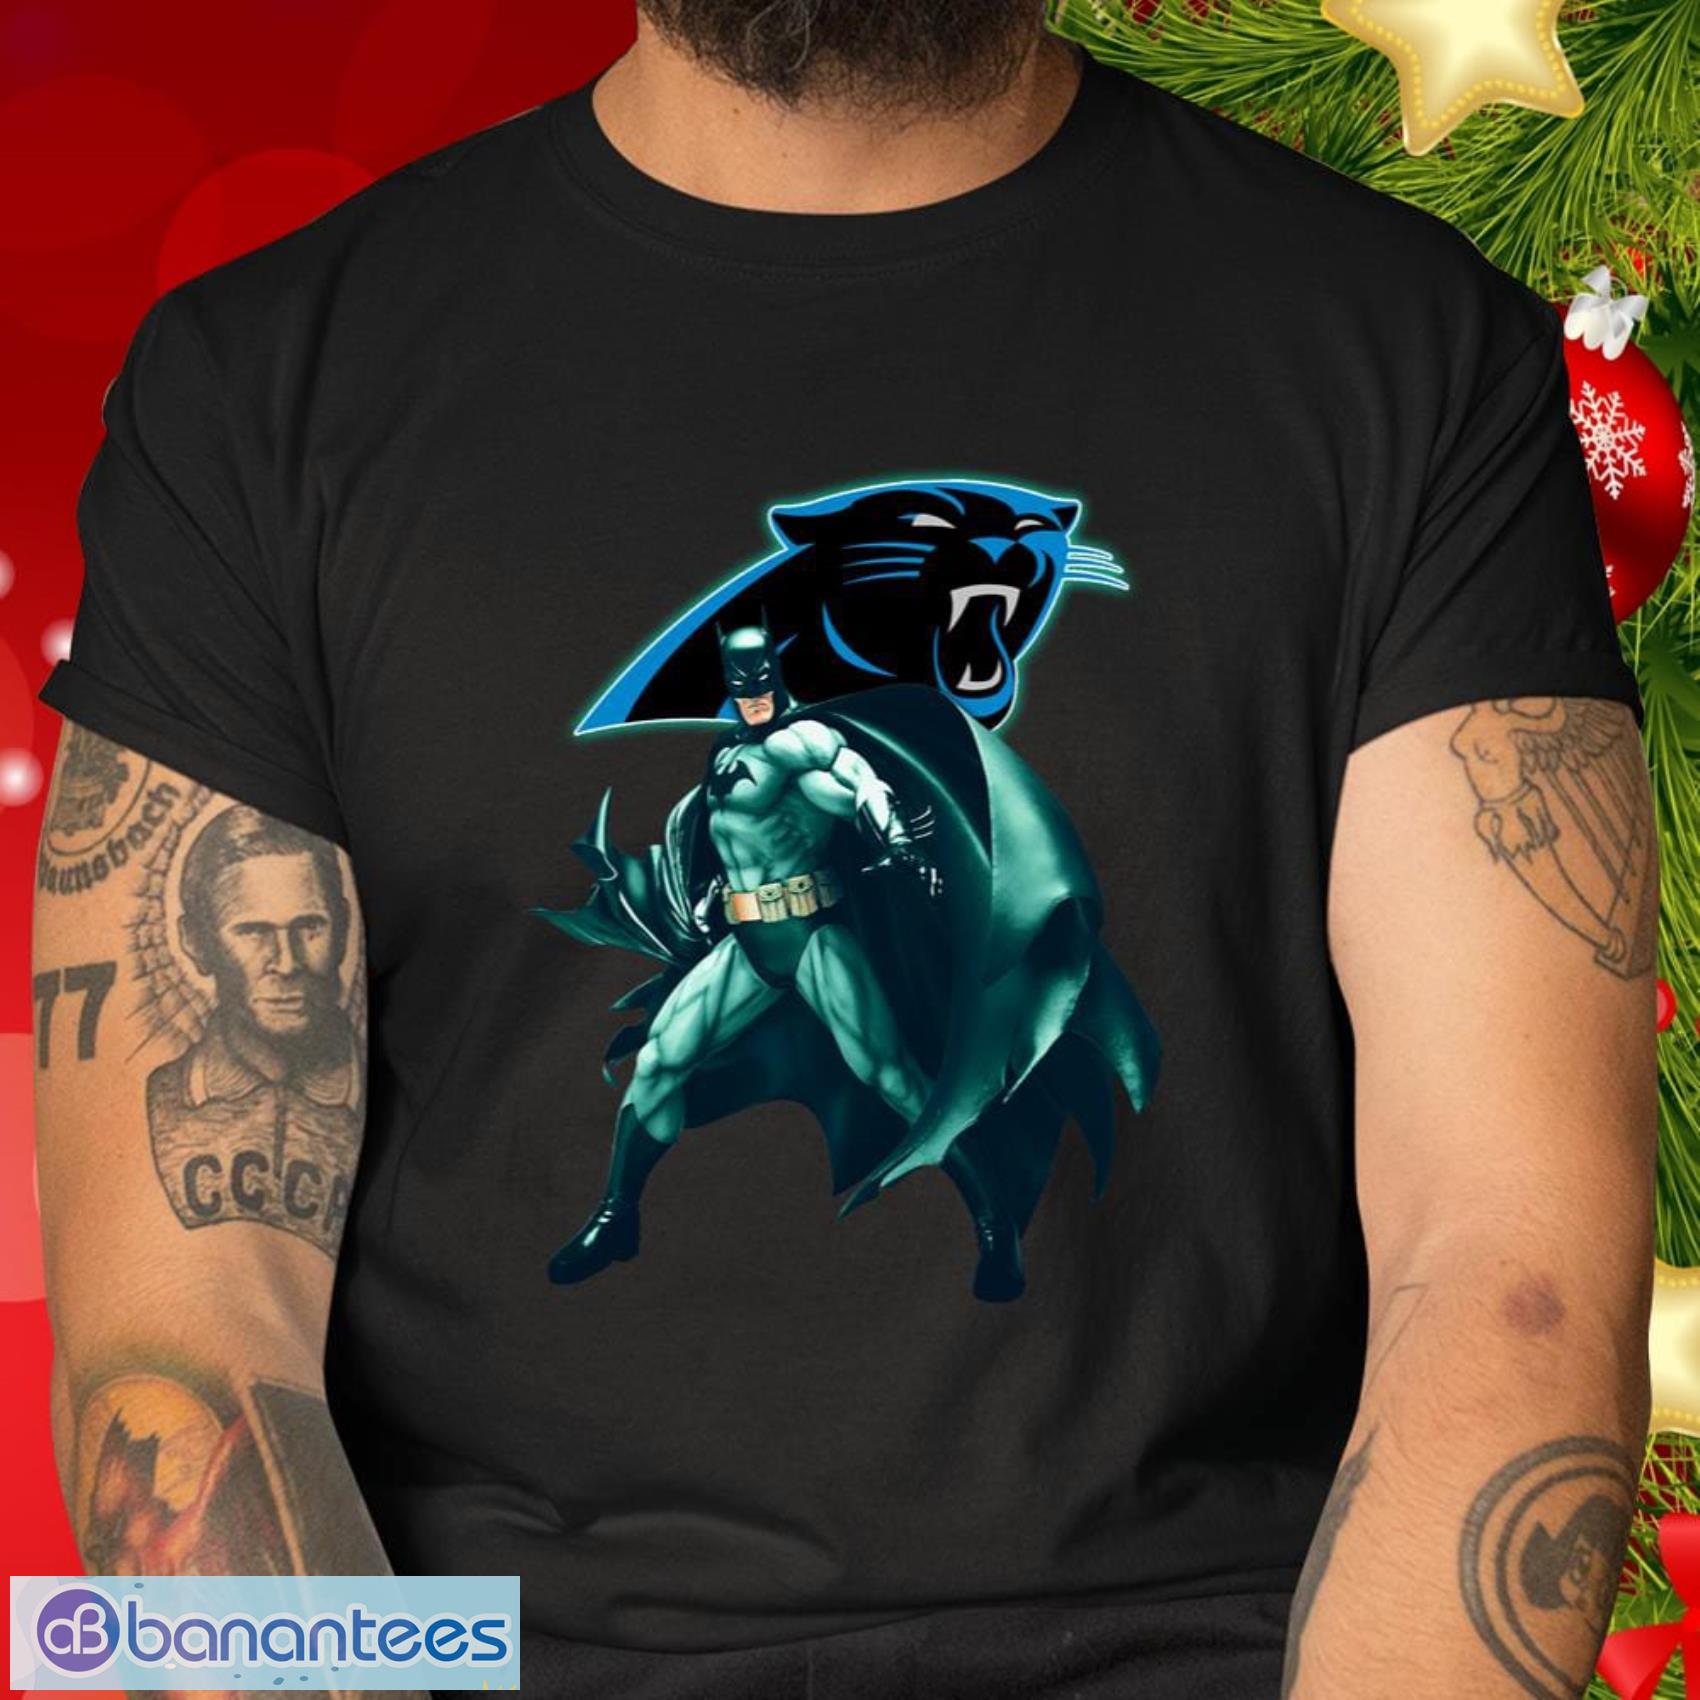 Carolina-Panthers Batman Dc T Shirt Gift For Sport Teams Fans - Carolina-Panthers Batman Dc T Shirt_2